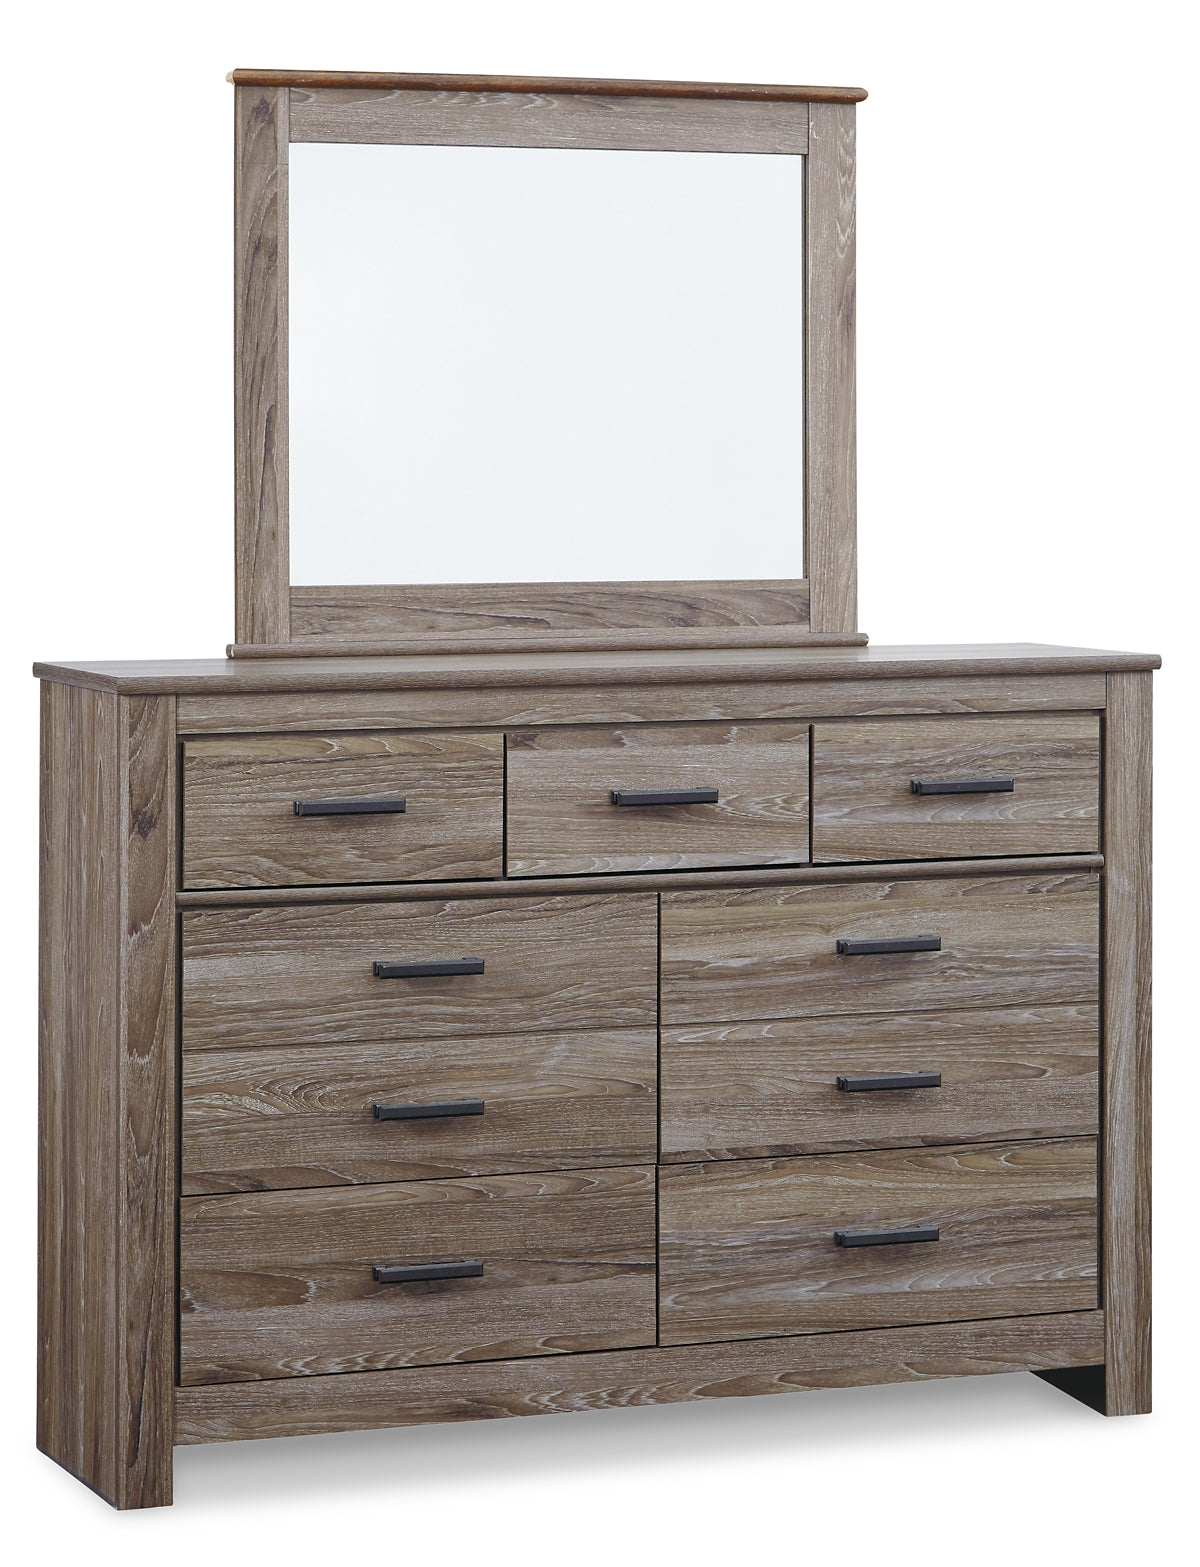 Zelen / Panel Headboard With Mirrored Dresser, Chest And Nightstand